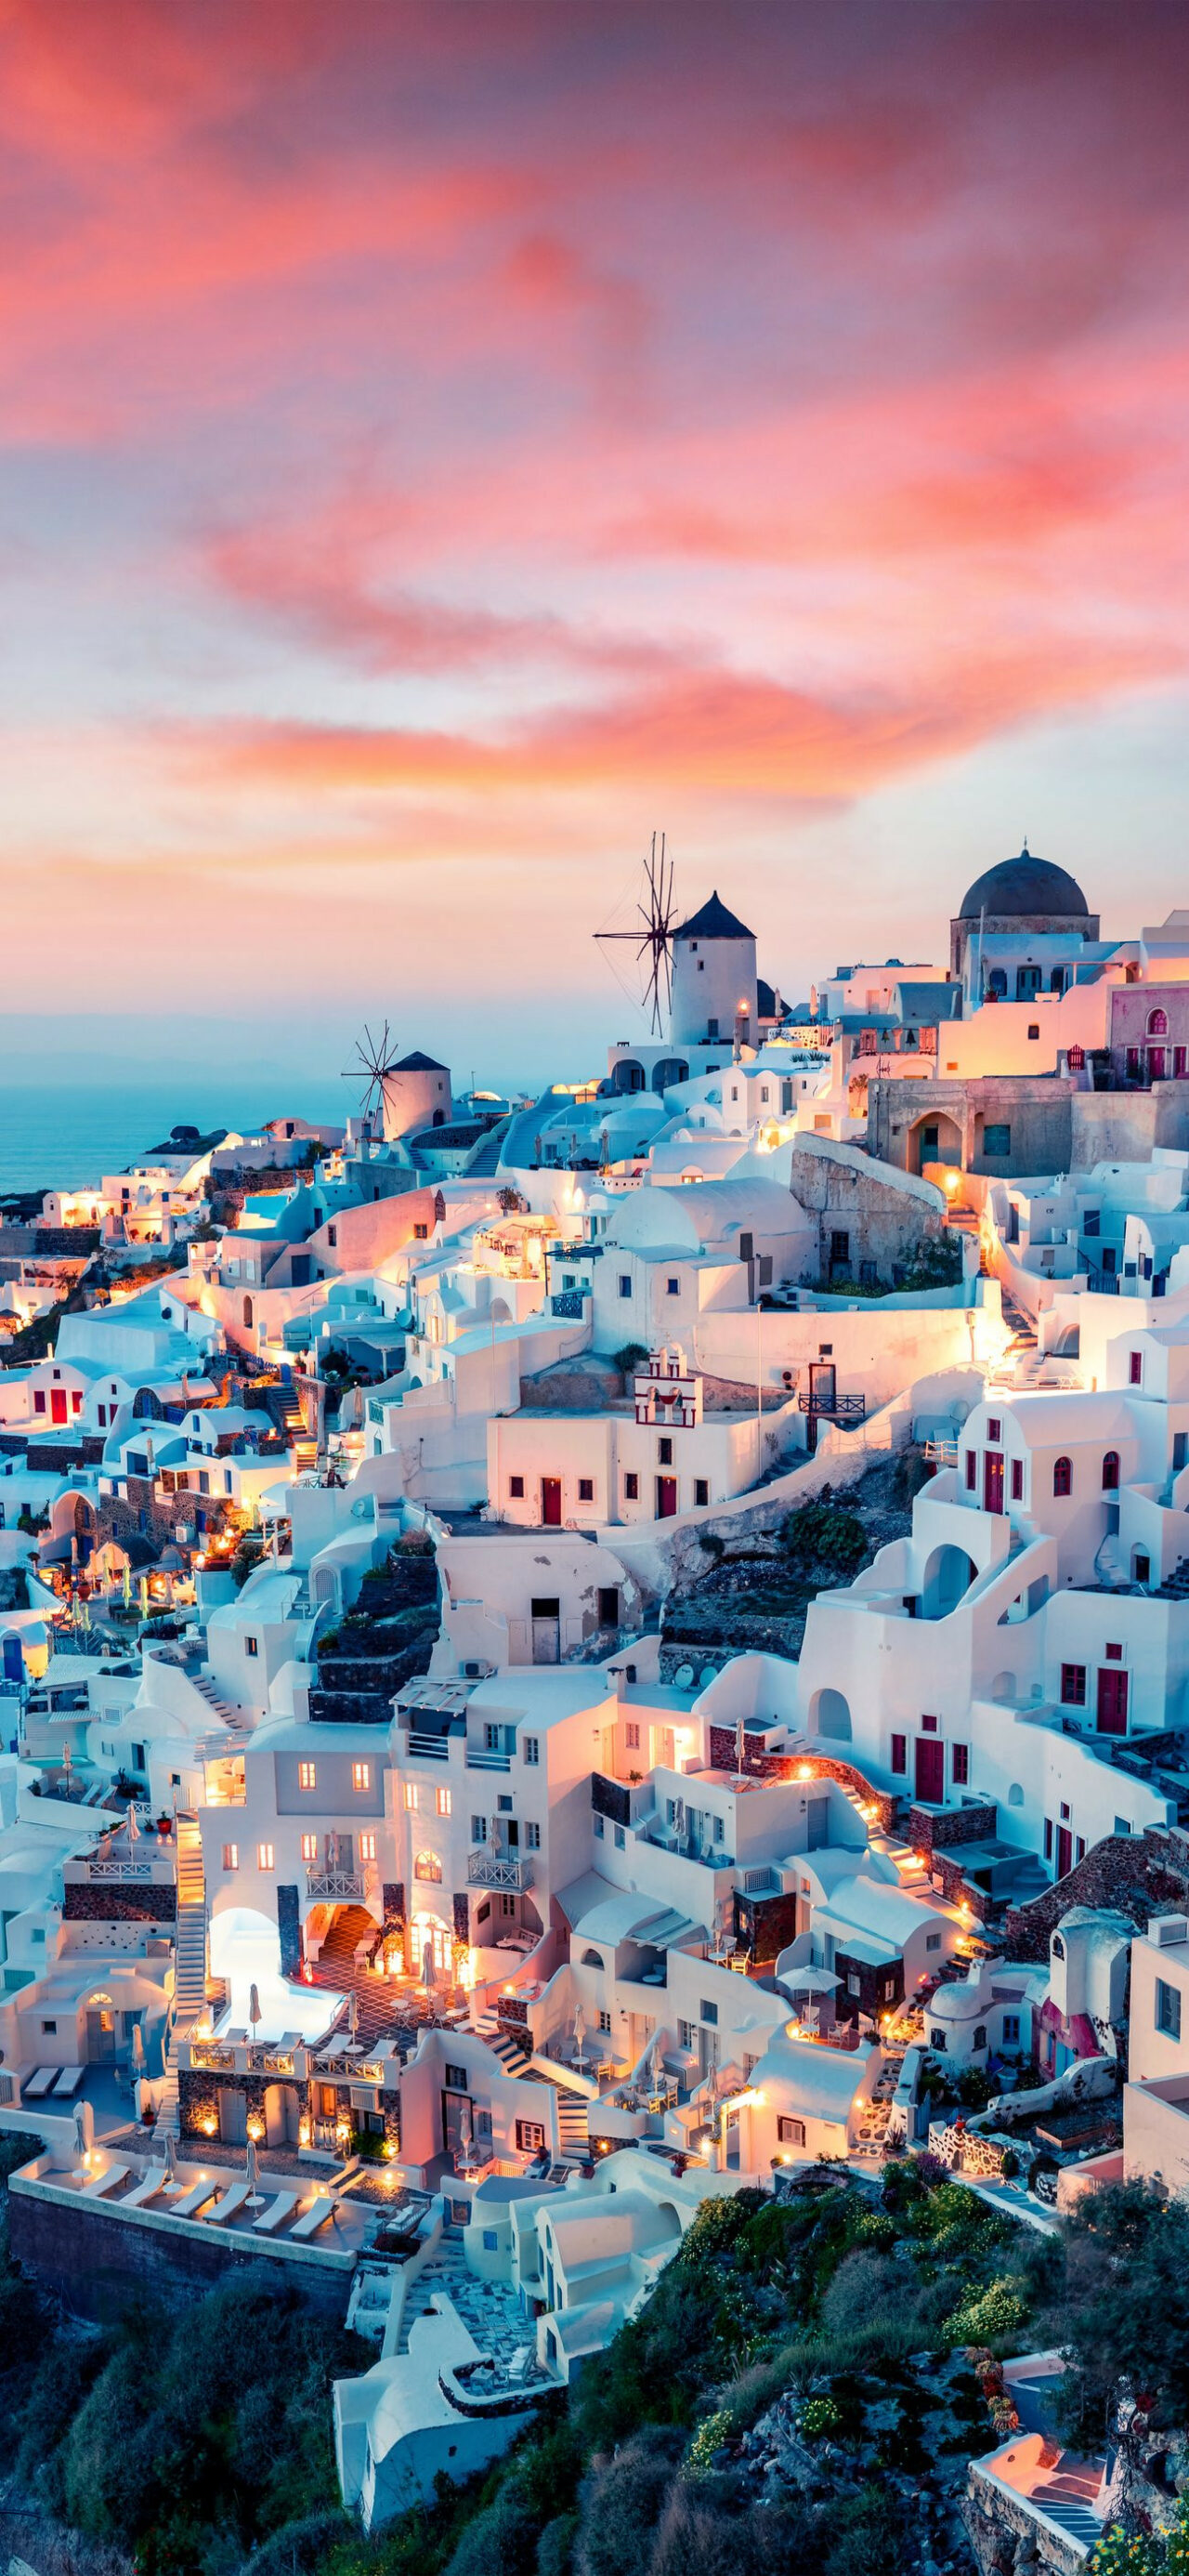 Best Greece iPhone HD Wallpapers  iLikeWallpaper